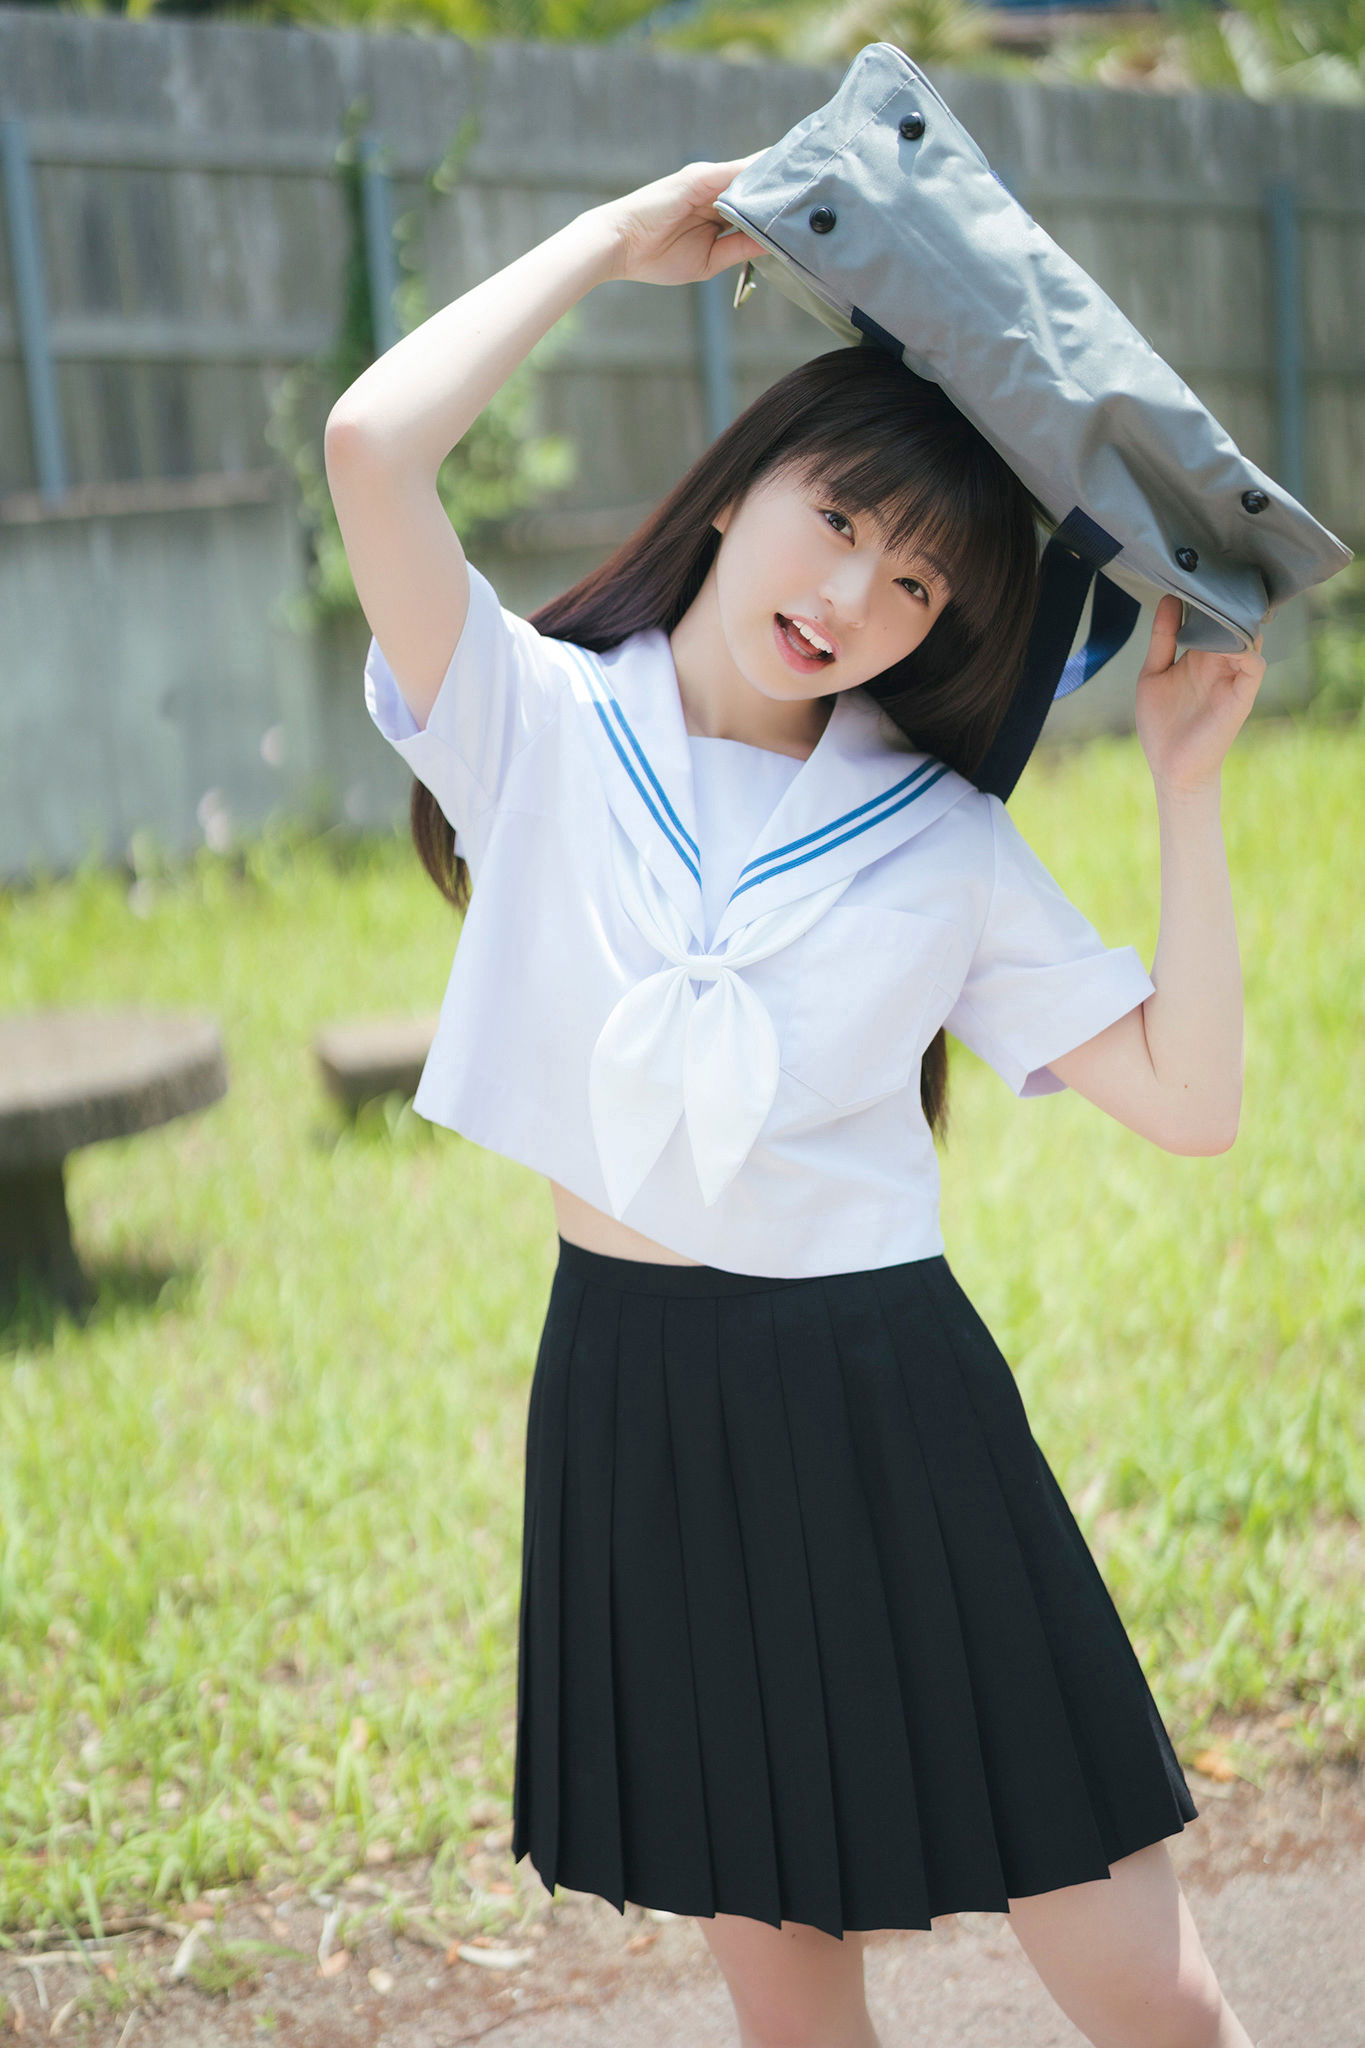 [Yanmaga Web] Sasaki Honoka (Up Up Girls (2)) - NEXT Oshi Girl! 01 Free1